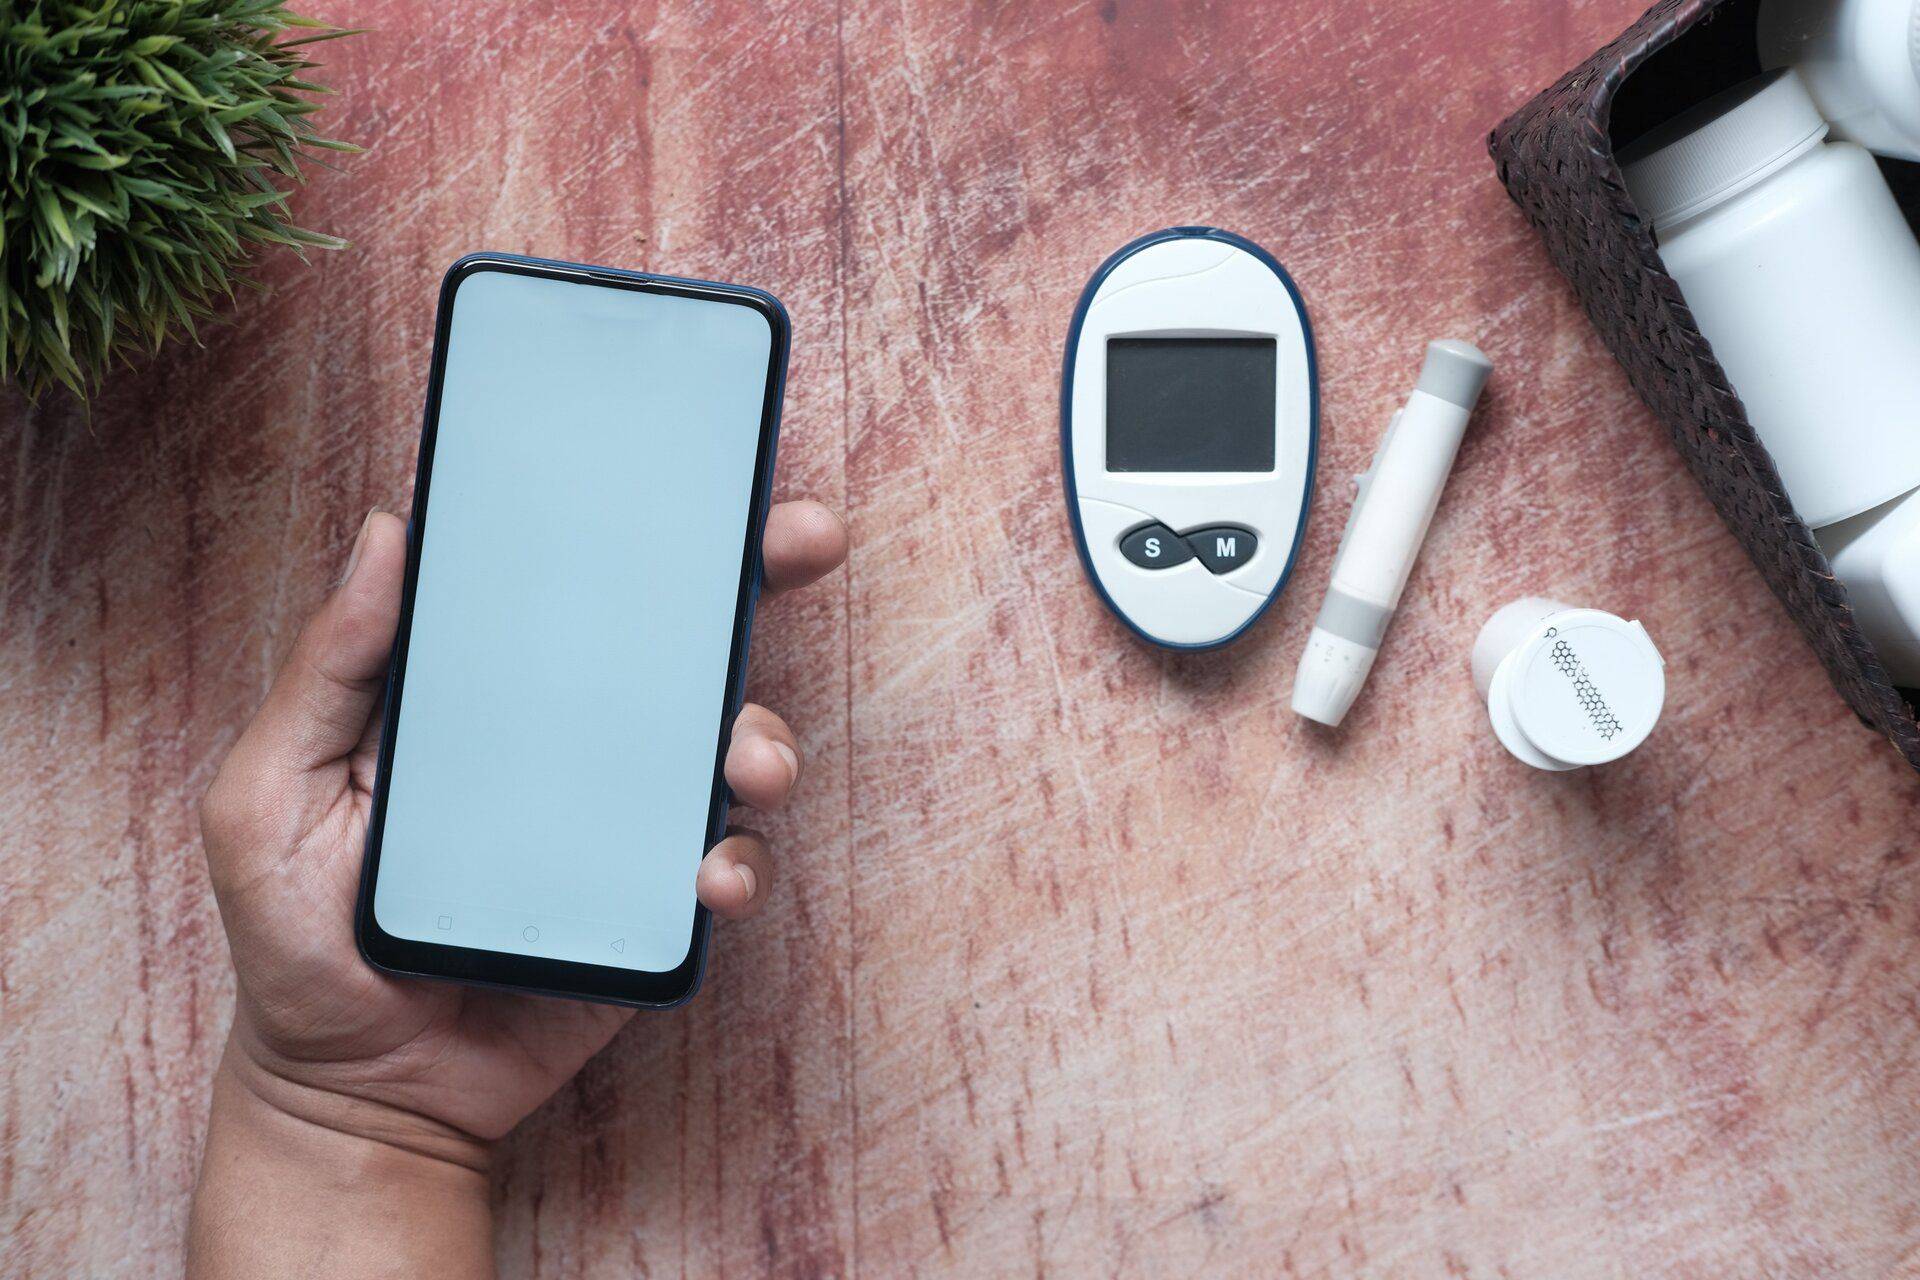 diabetes devices on desk